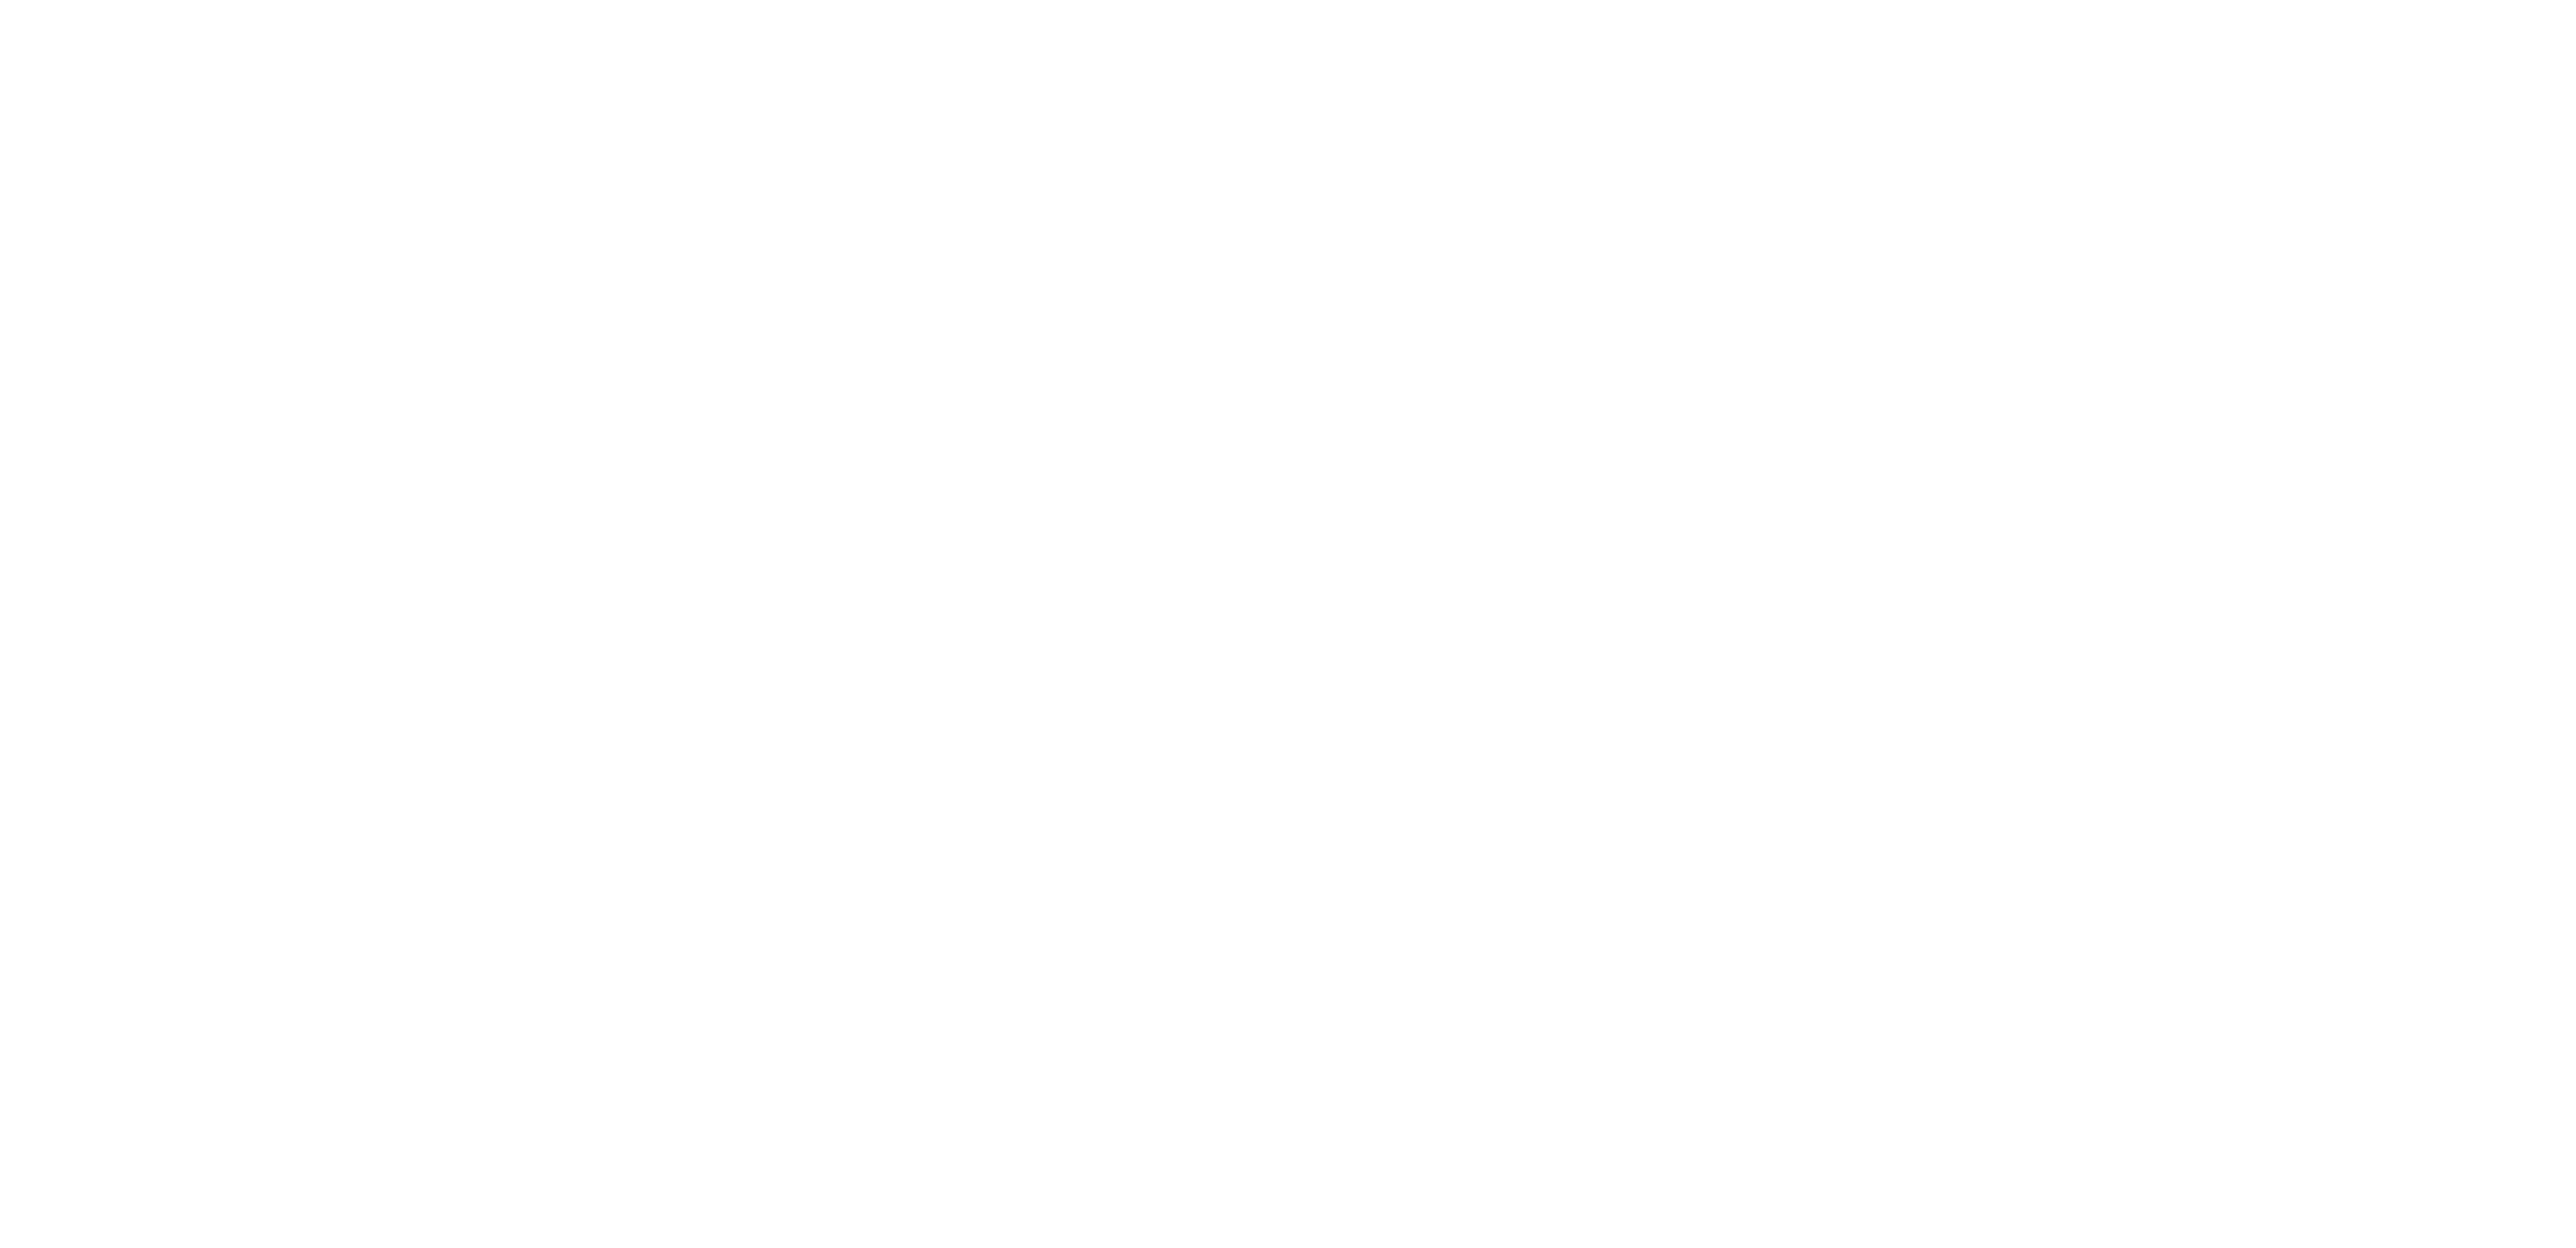 The EXP Blueprint